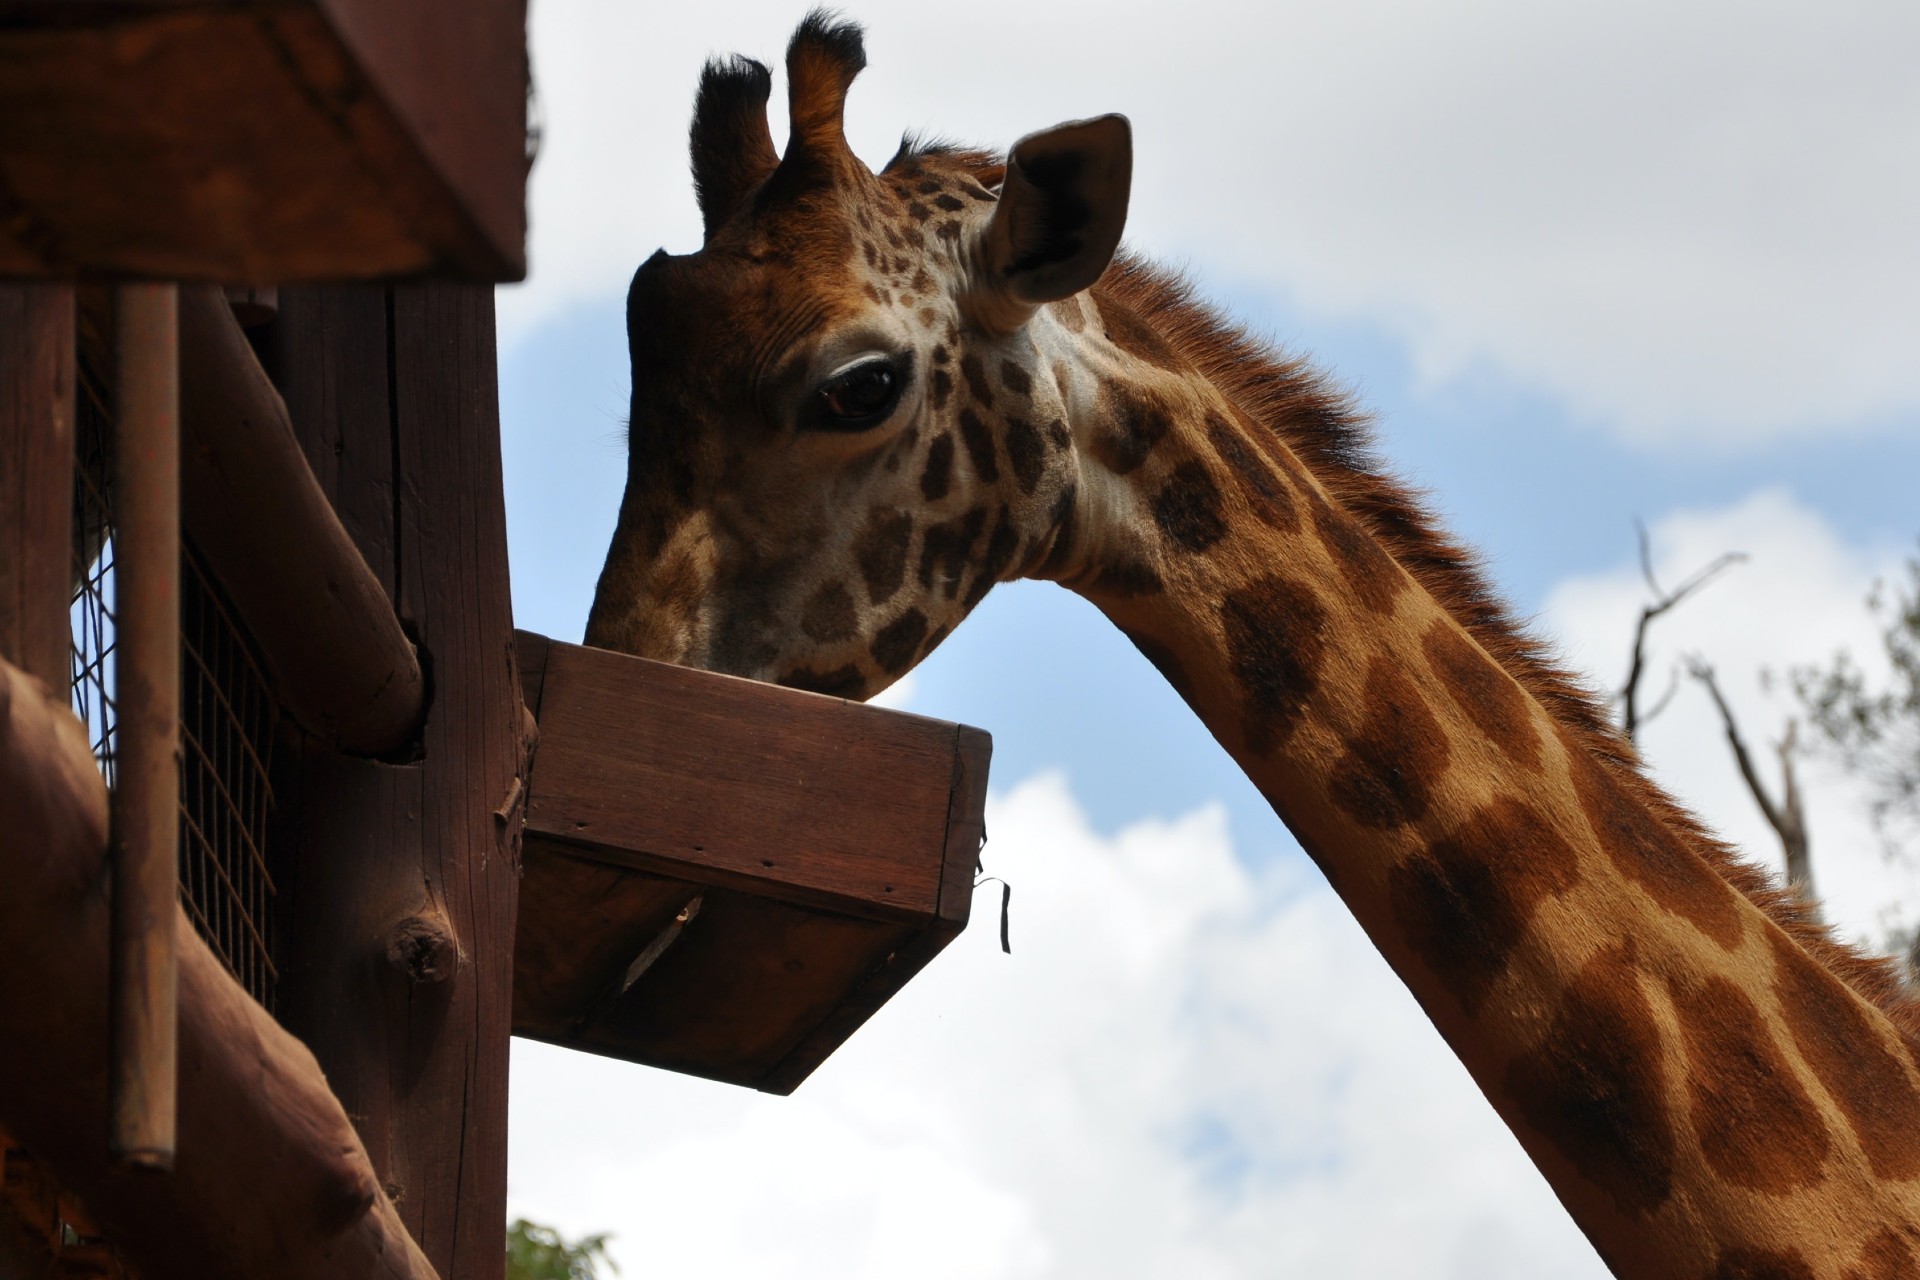 A giraffe eating from a feeding trough